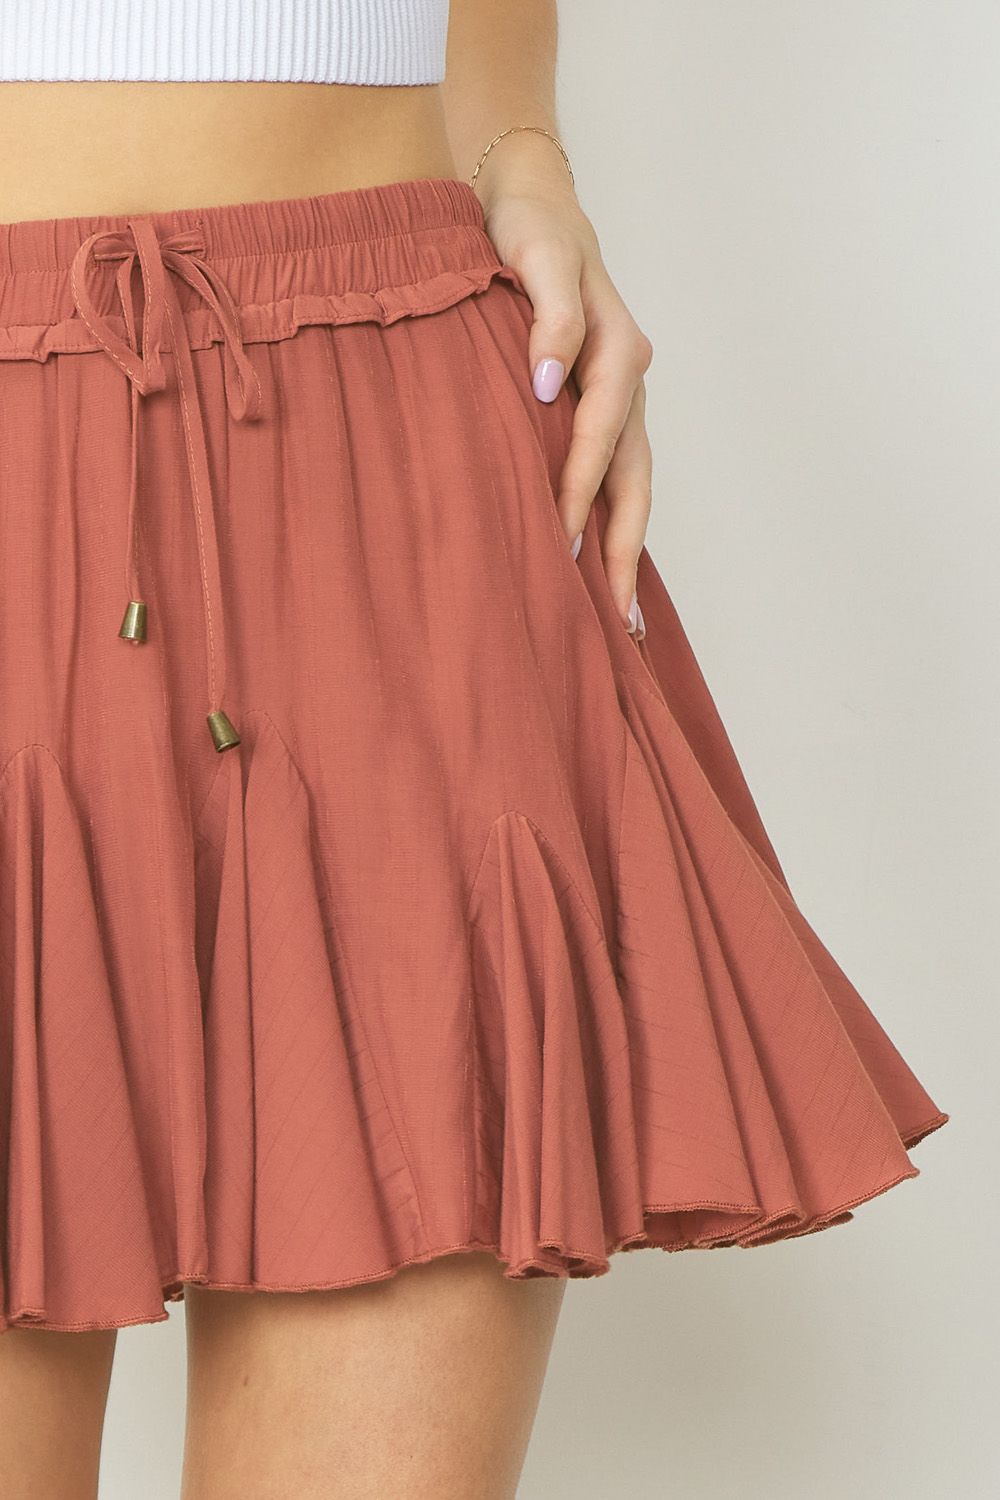 Entro® Godet Drawstring Skirt with Built in Shorts- Brick Red